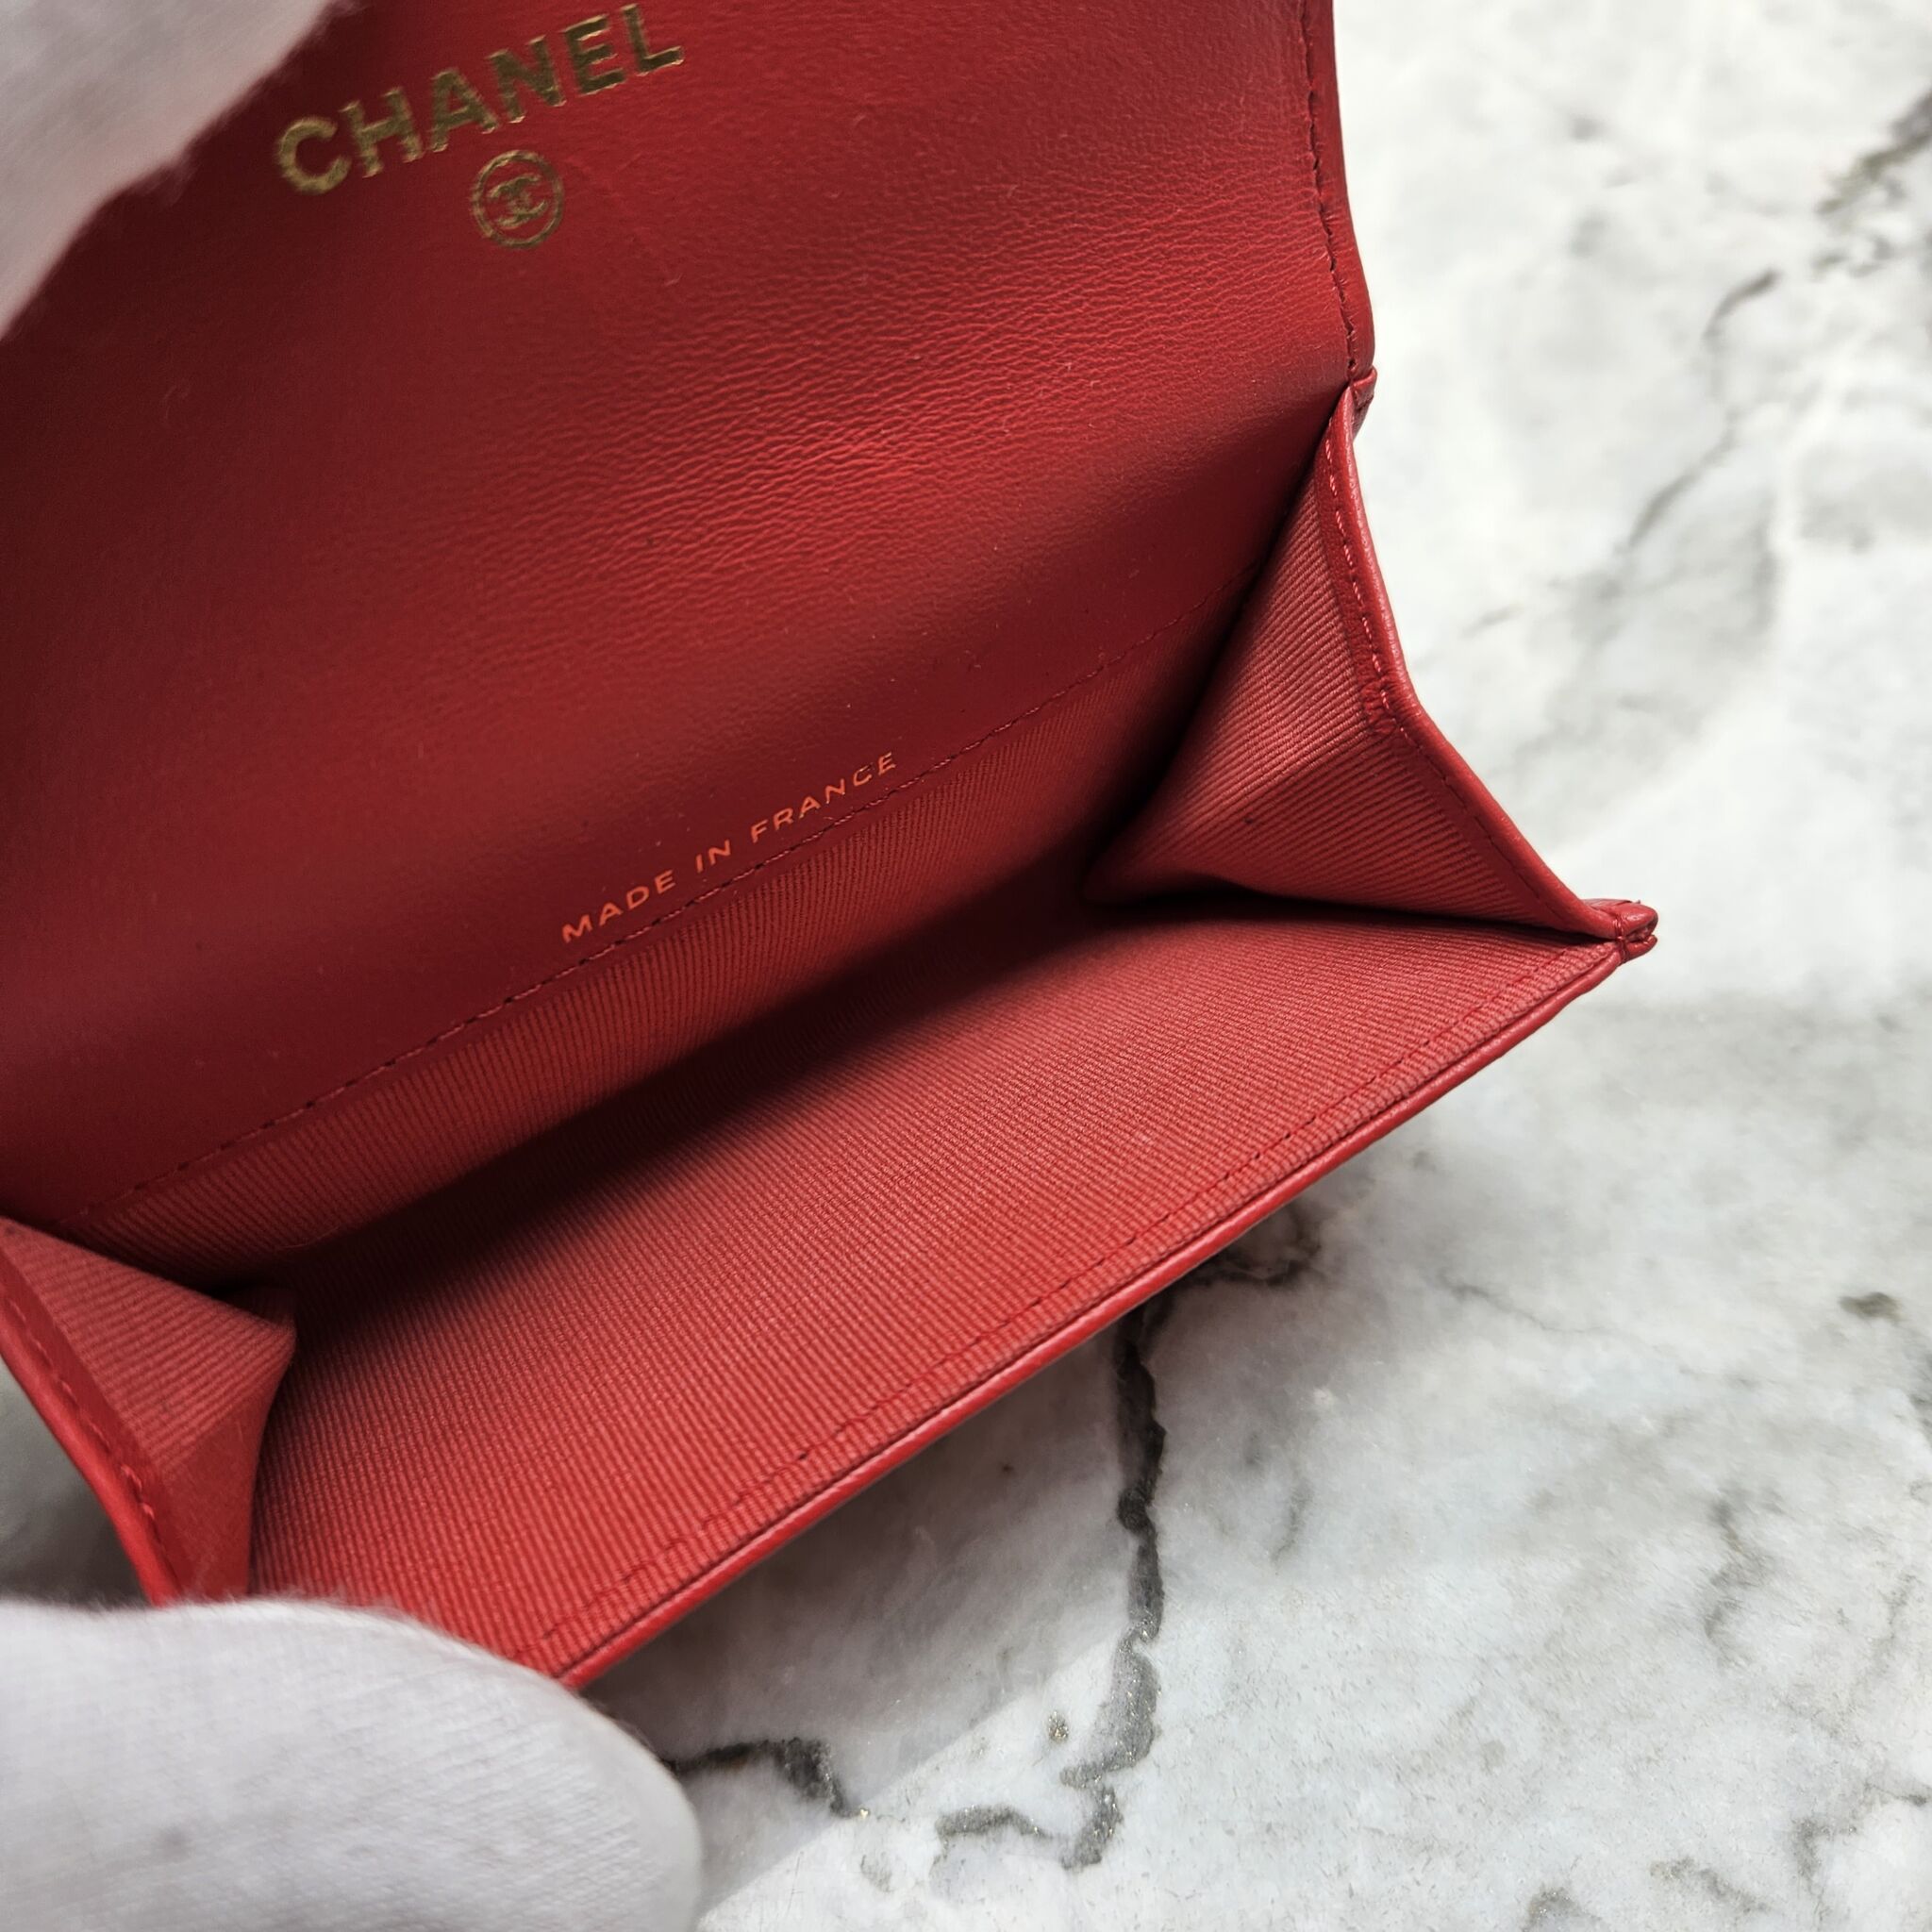 Chanel Flap Cardholder, Lambskin, Red GHW - Laulay Luxury